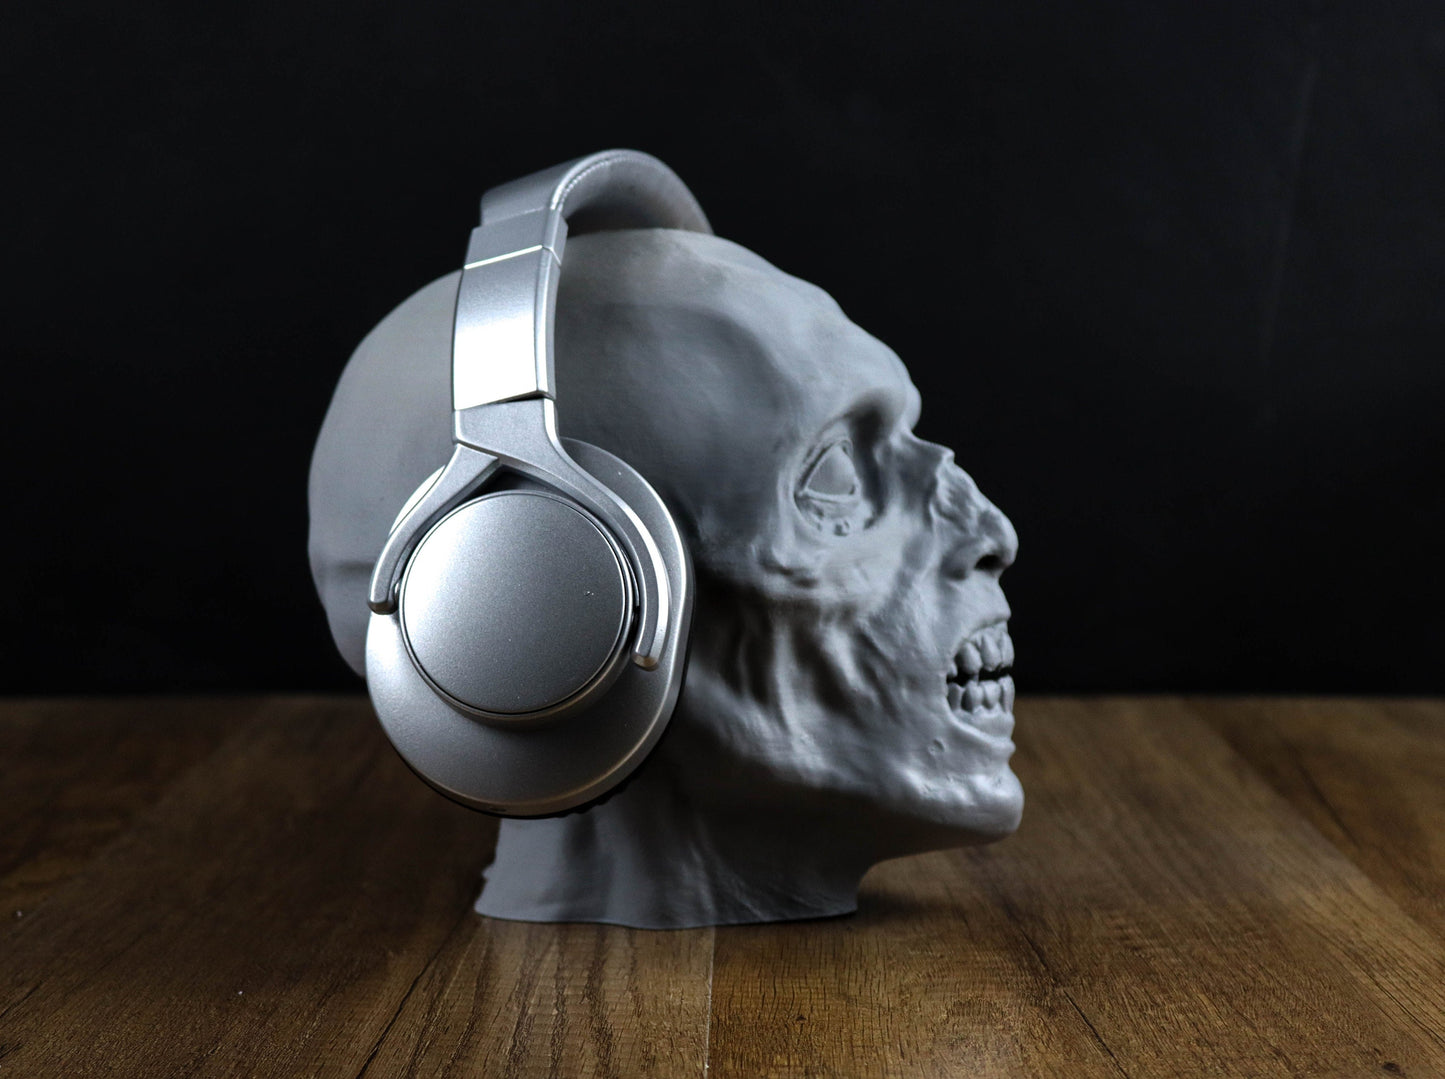 Zombie Headphone Holder, Horror Headset Stand, Horror Prop, Bust, Halloween Decor